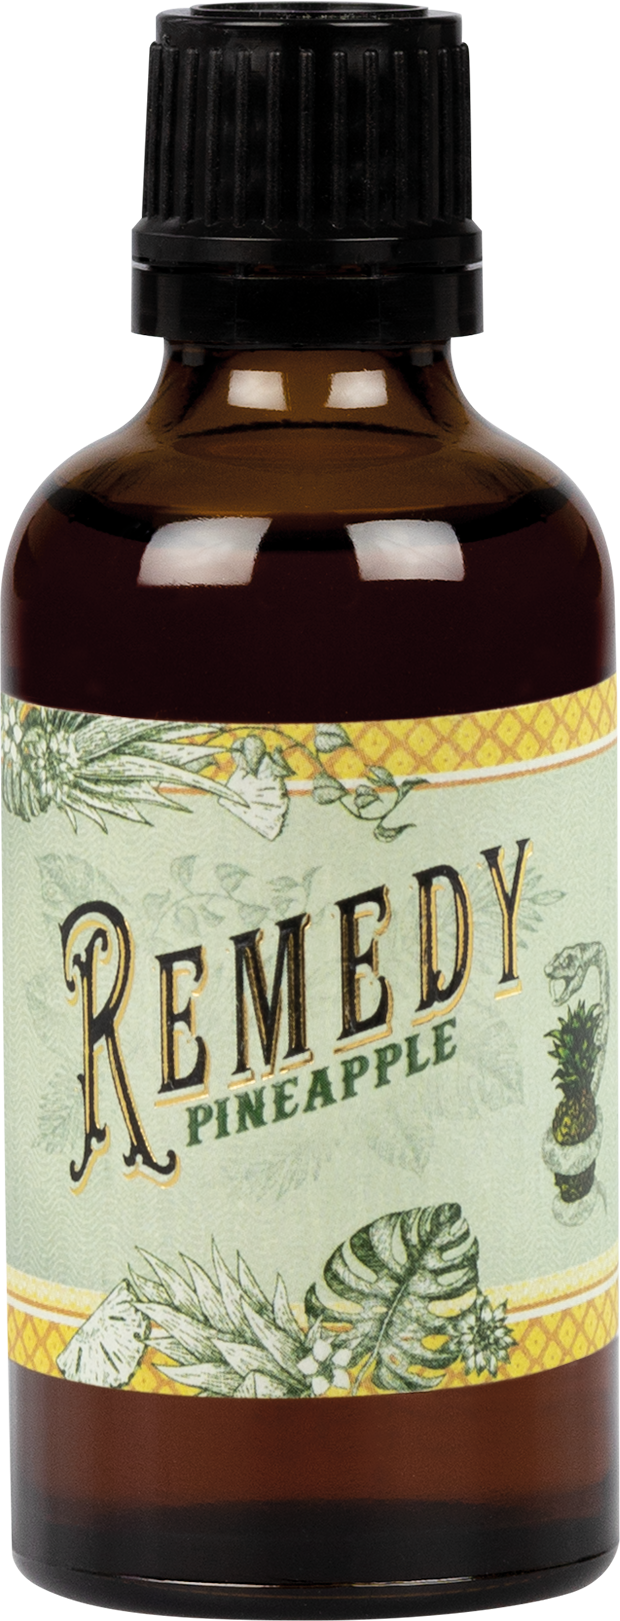 Remedy Pineapple 40% 0,05l